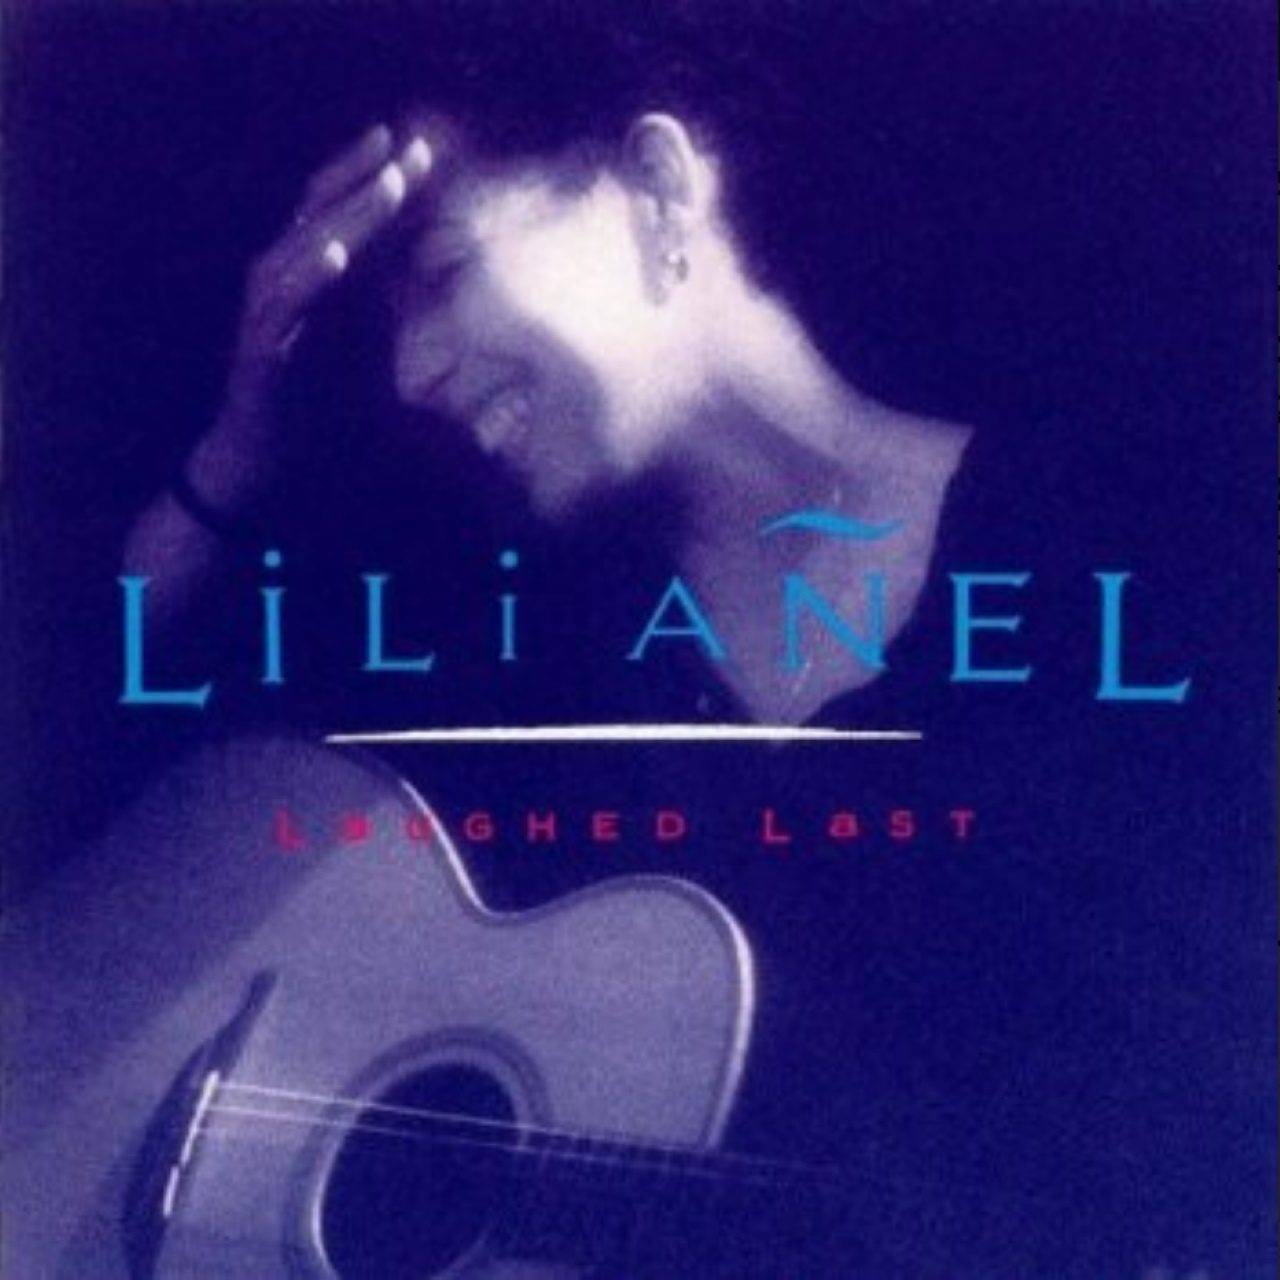 Añel Lili – Laughed Last cover album